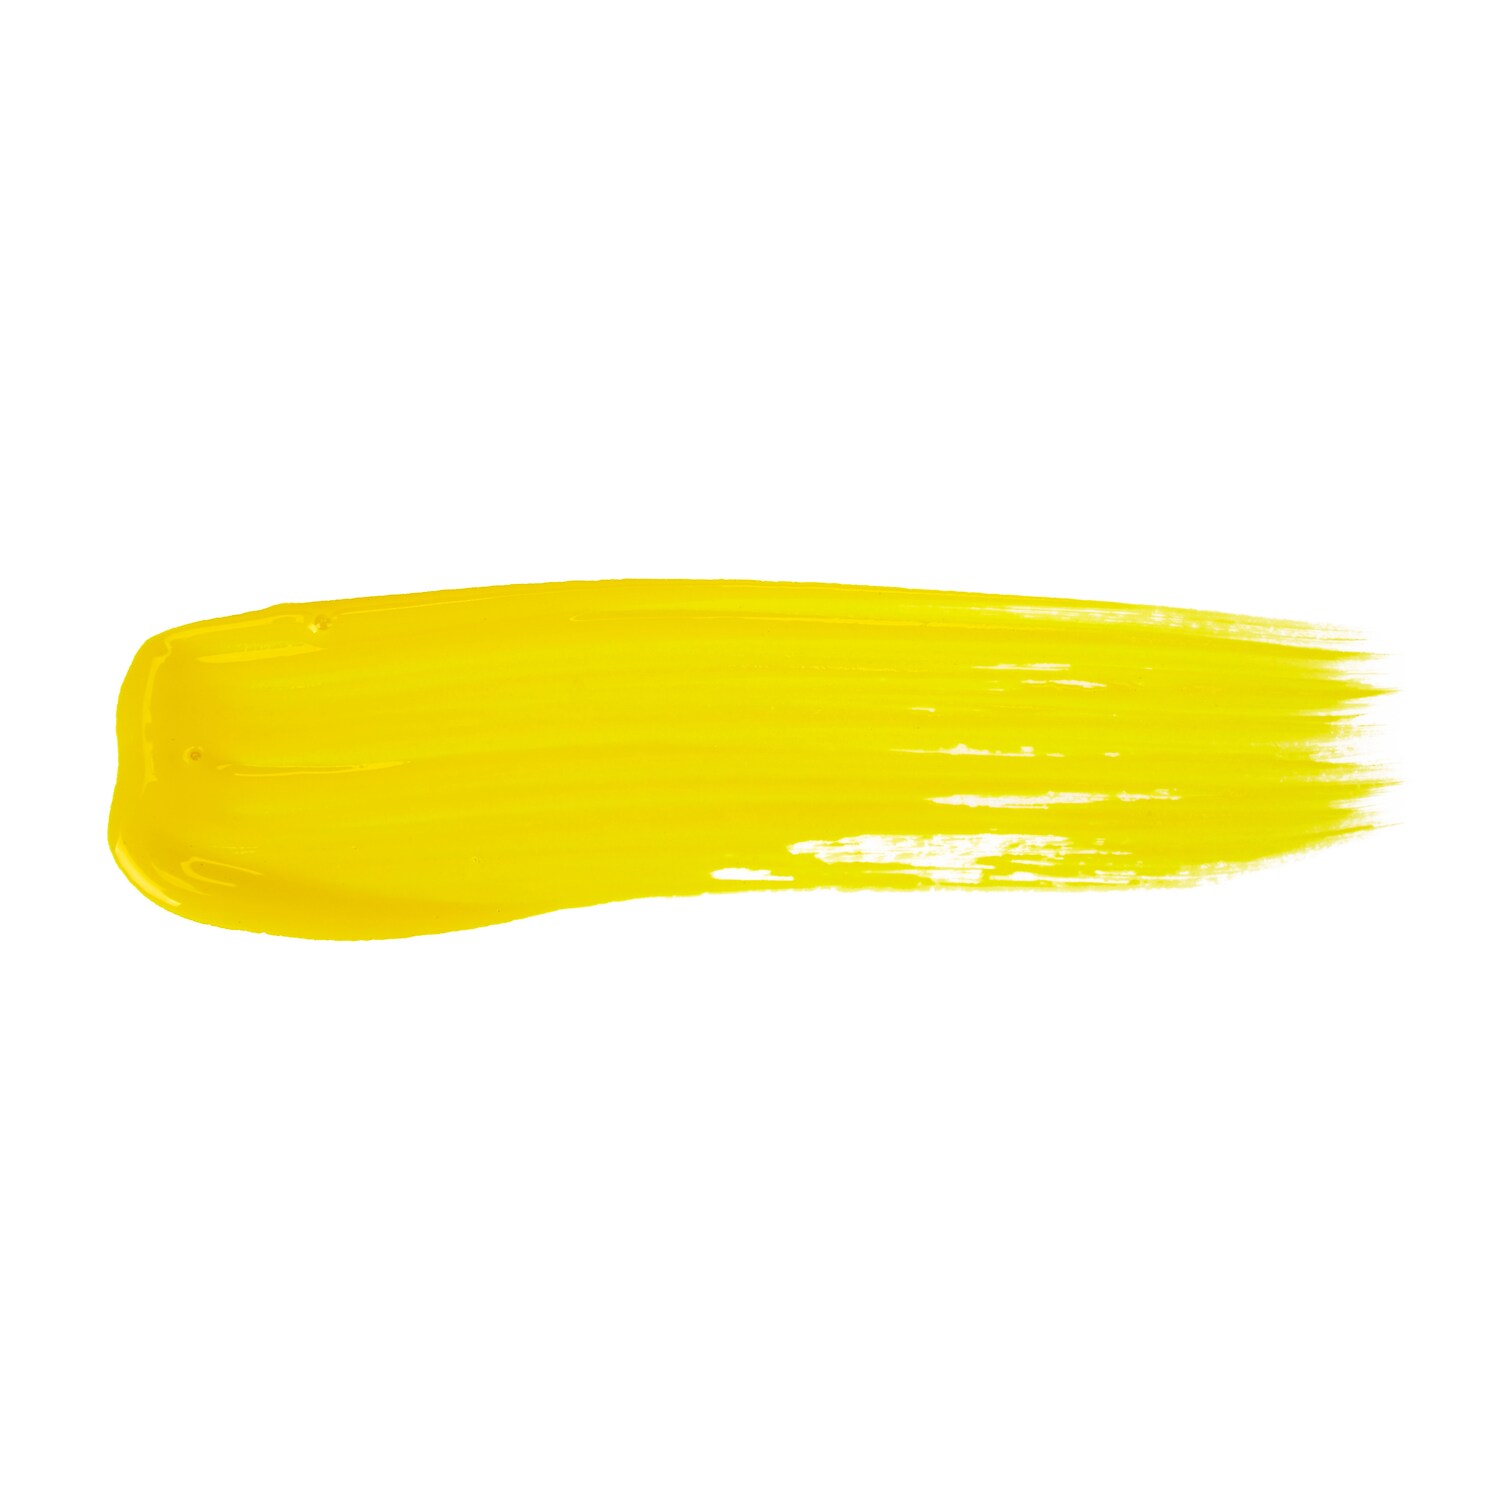 Crayola Artista II  Washable Tempera Paint, Pint, Yellow - image 3 of 4